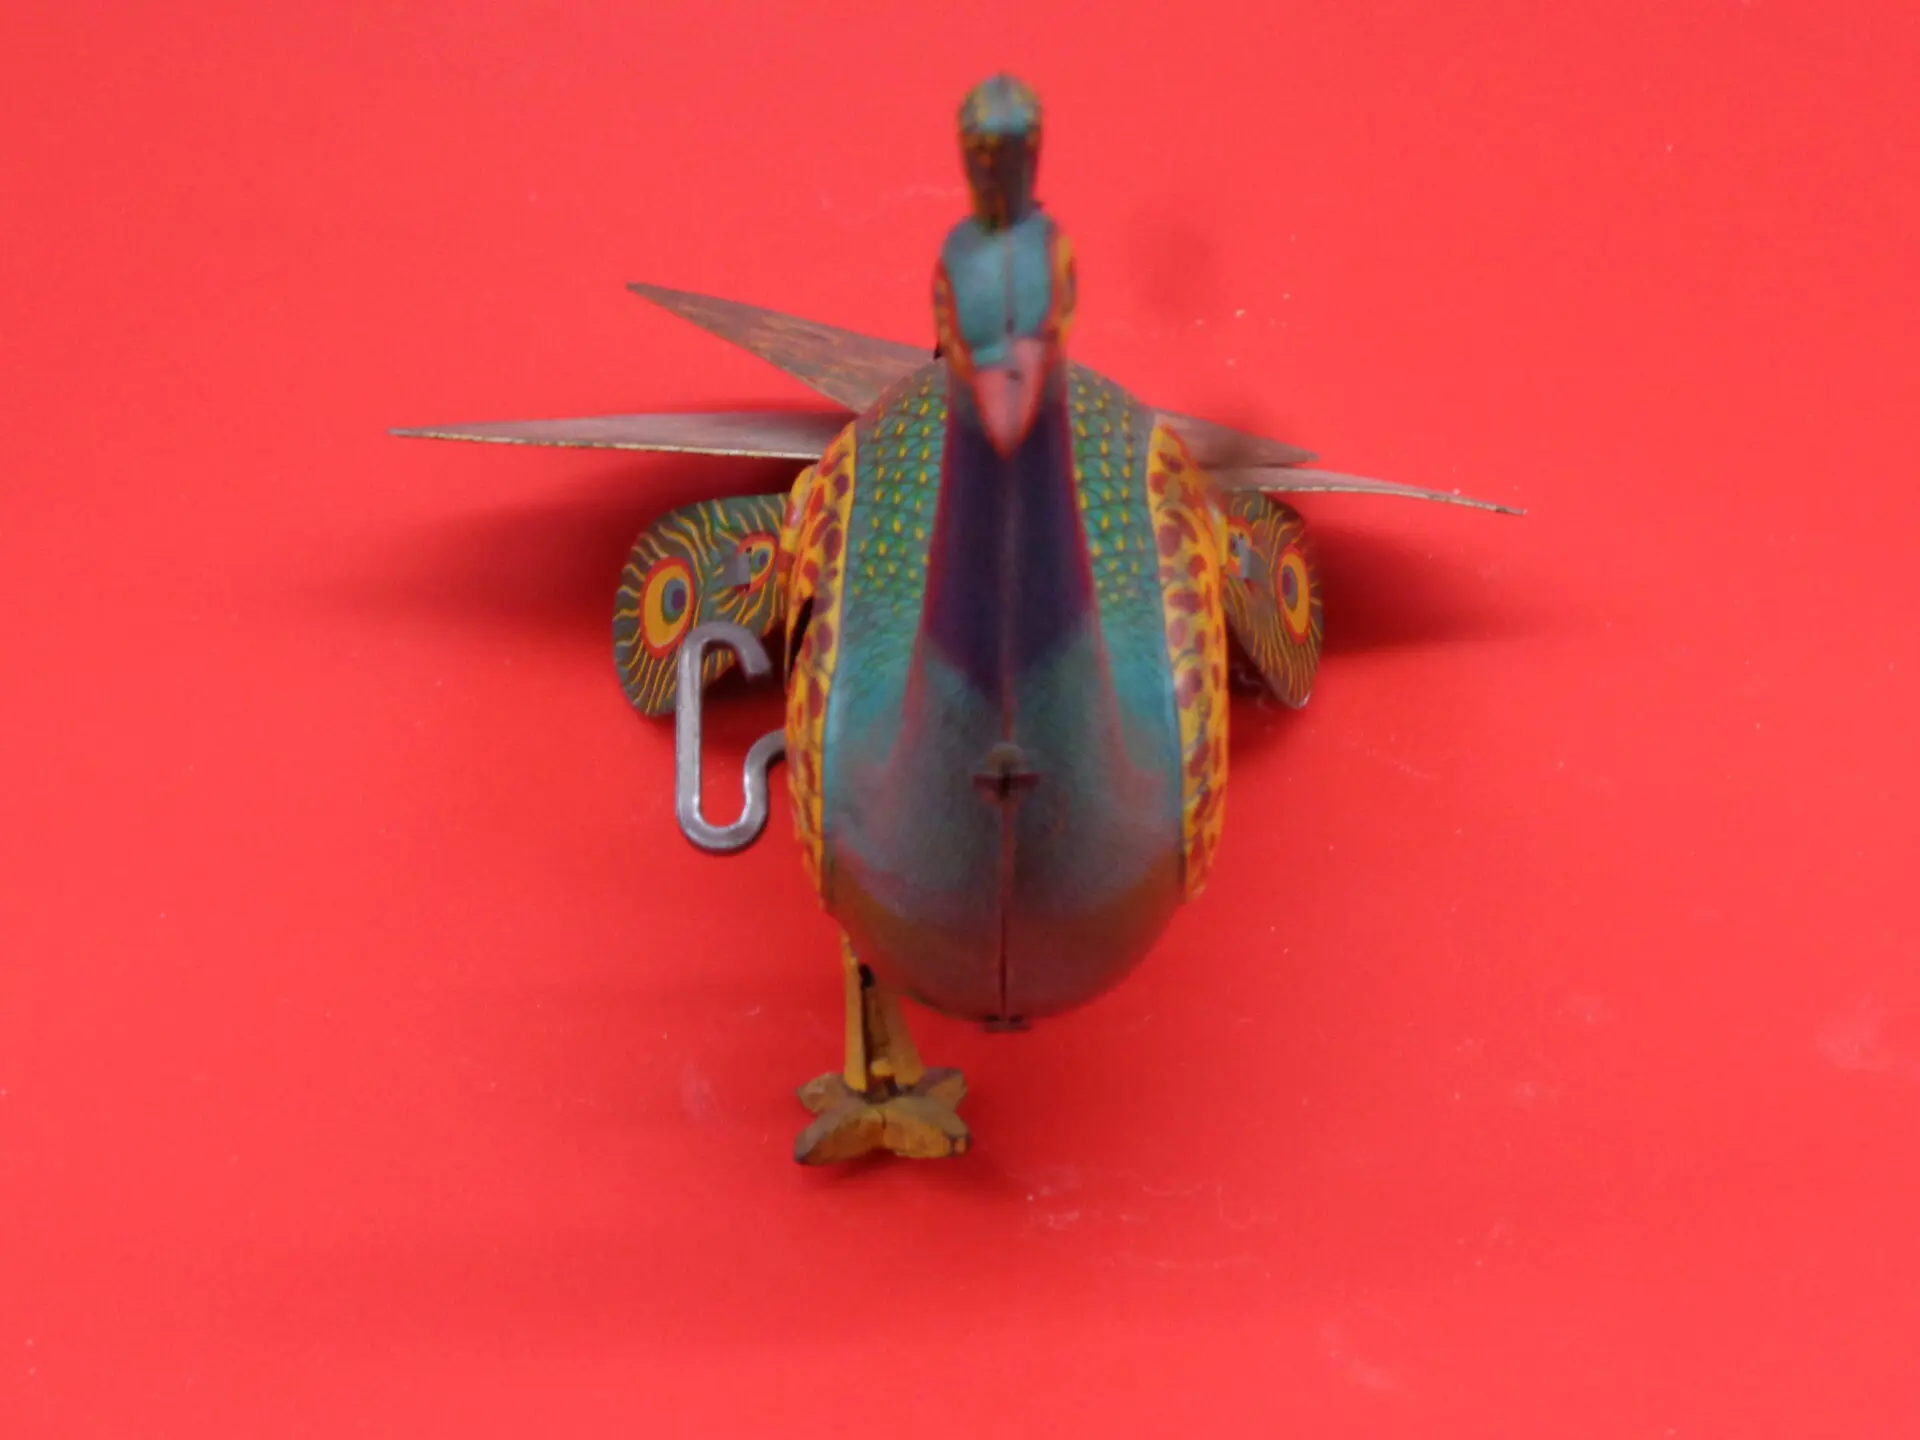 Vintage wind-up toy peacock